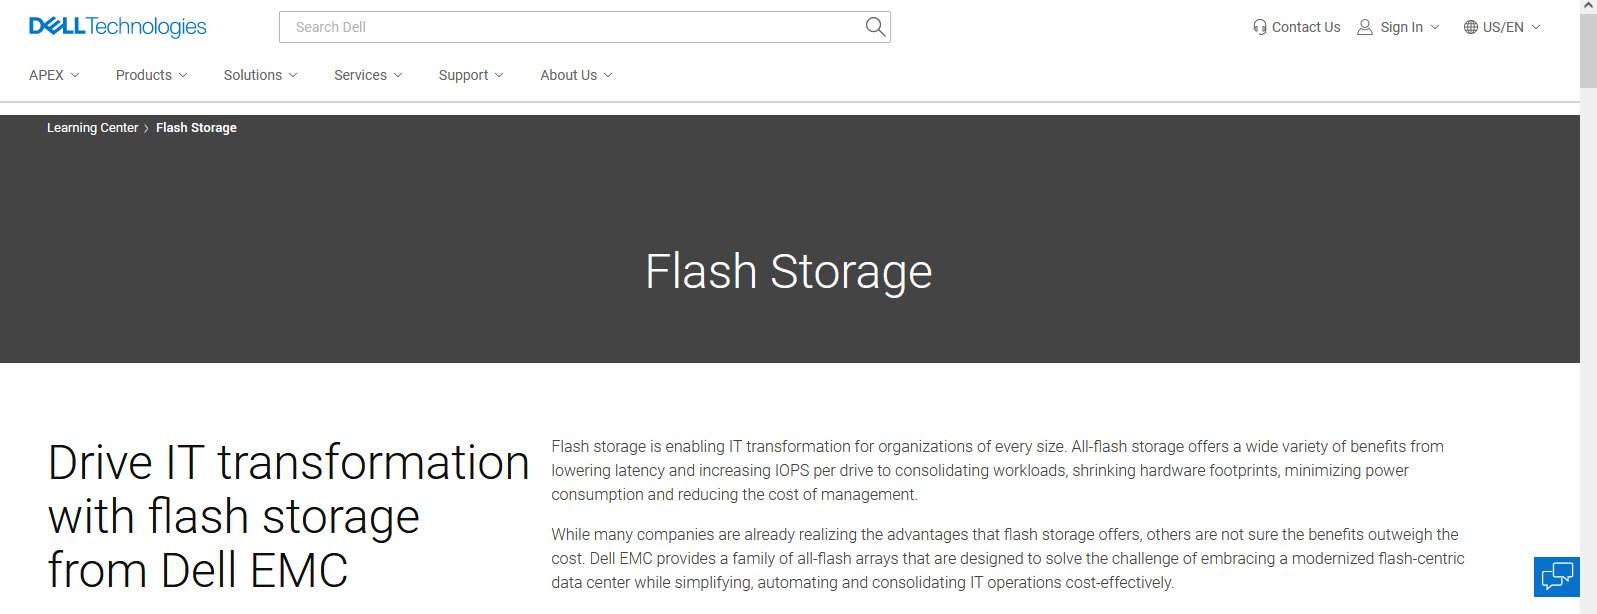 Dell EMC All-Flash Arrays All-Flash Arrays (AFA) Hardware topattop